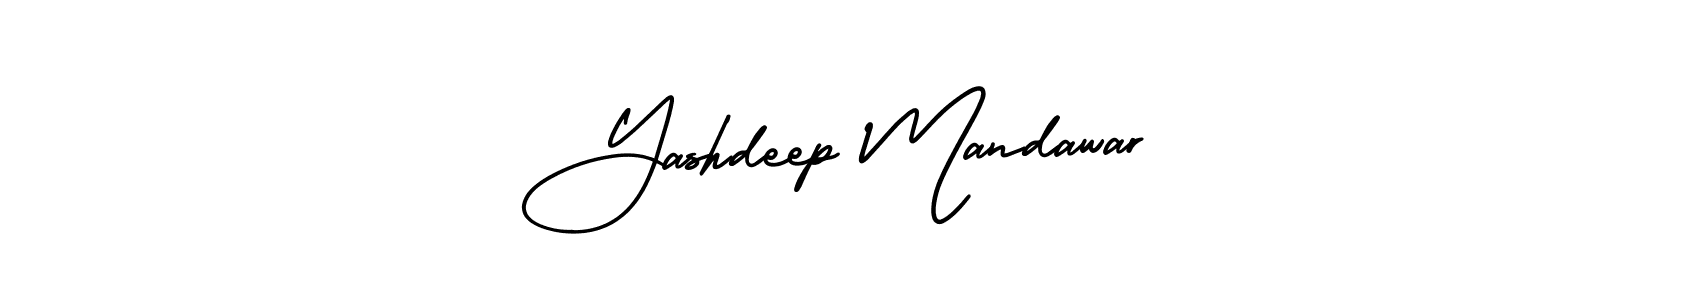 How to Draw Yashdeep Mandawar signature style? AmerikaSignatureDemo-Regular is a latest design signature styles for name Yashdeep Mandawar. Yashdeep Mandawar signature style 3 images and pictures png